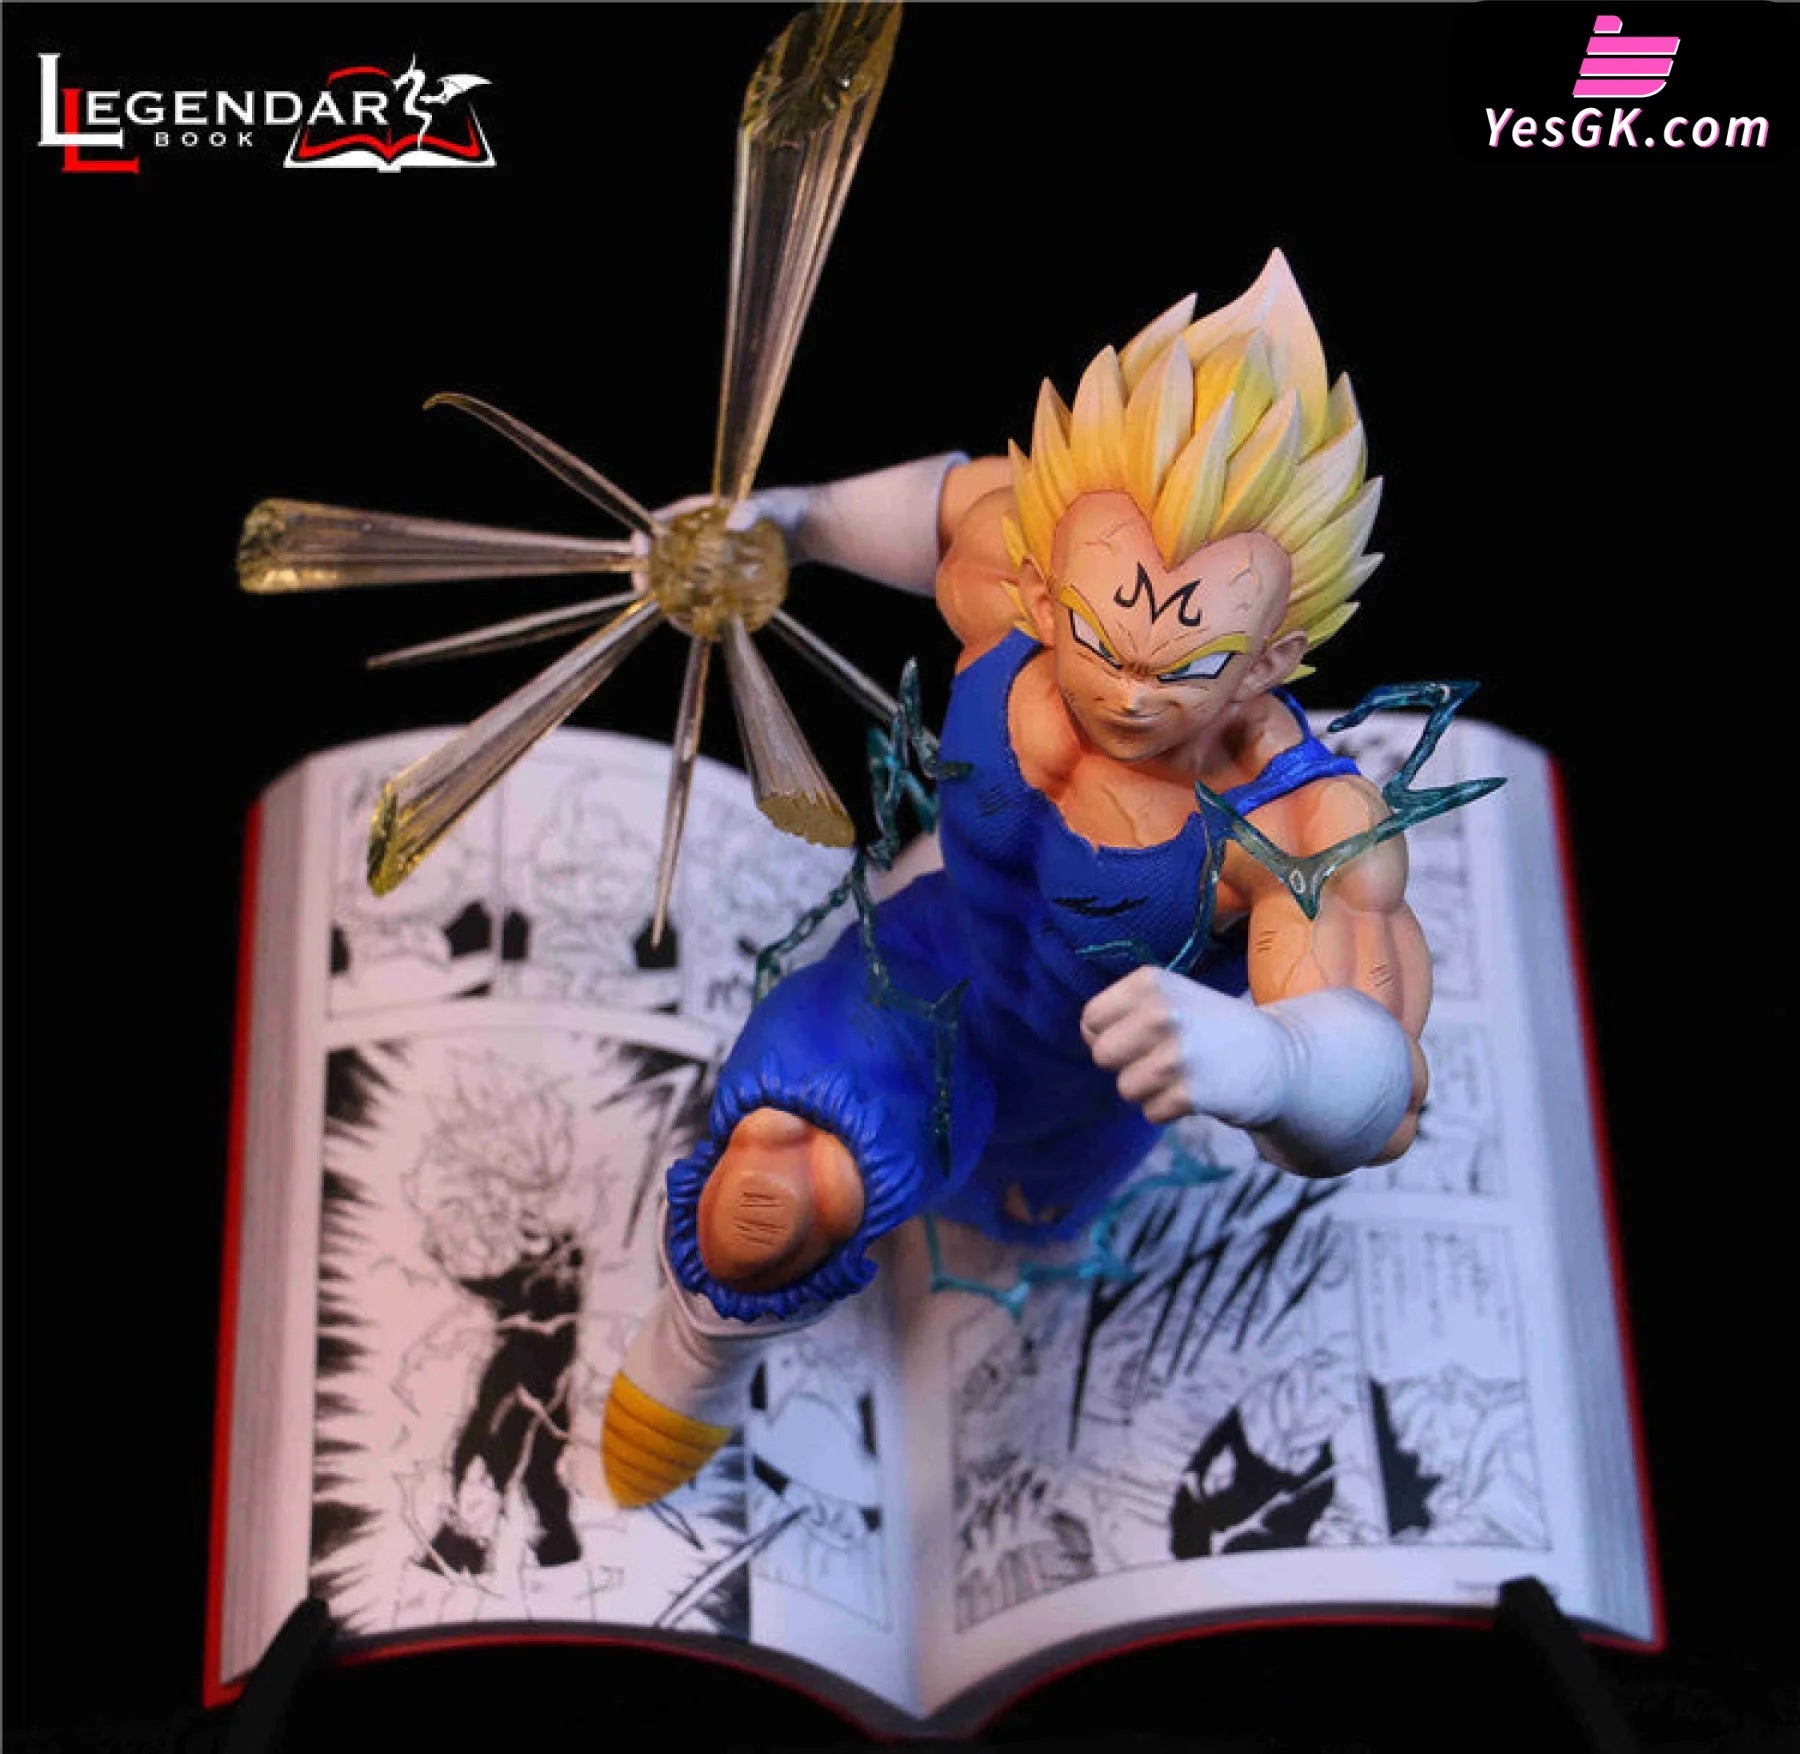 Dragon Ball Vegeta Resin Statue - Legendary Book Studio [In-Stock] Full Payment / 1/6 Scale